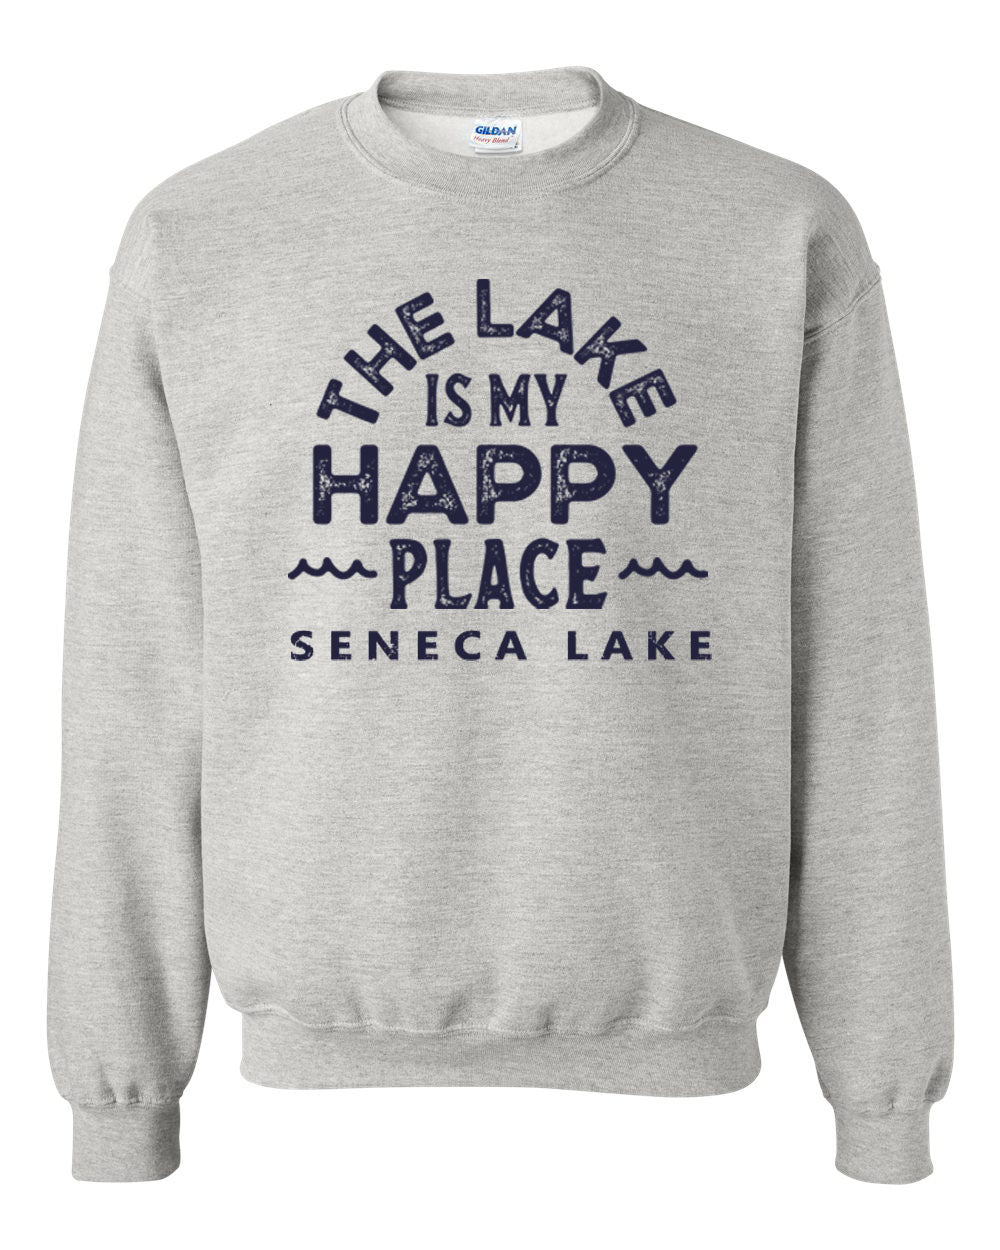 Seneca Lake Design 4 non hooded sweatshirt